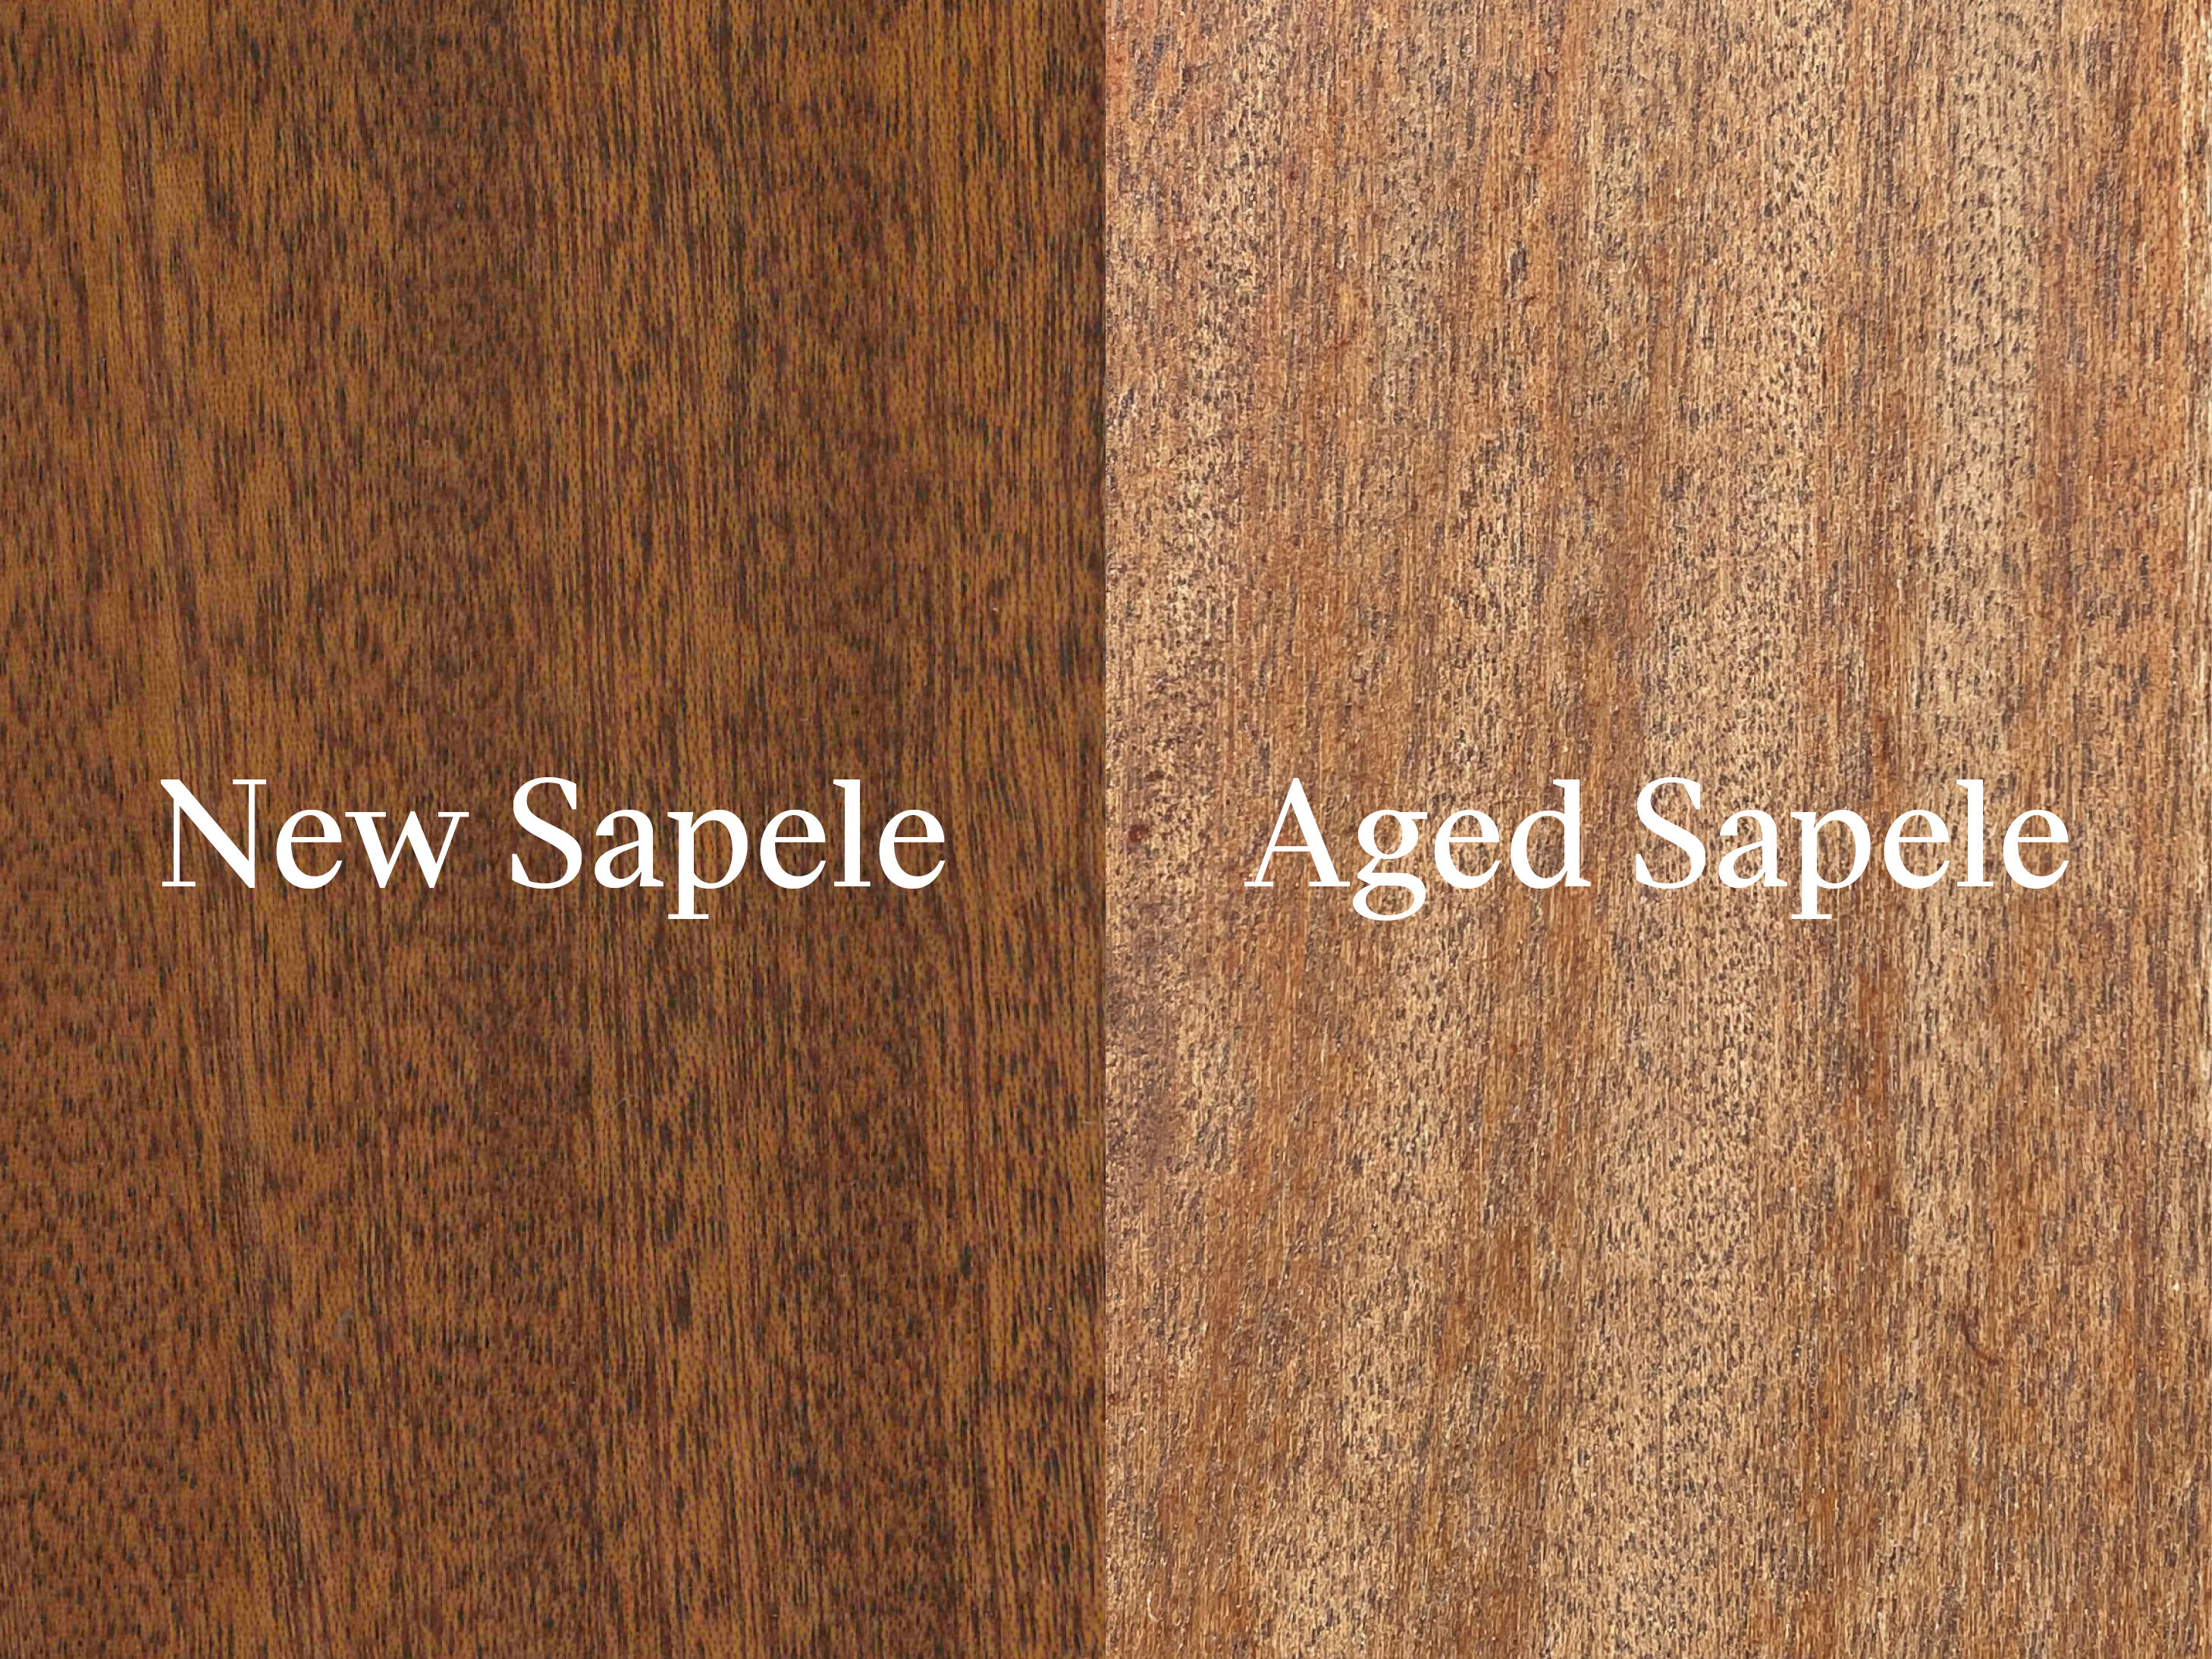 New Sapele vs Aged Sapele